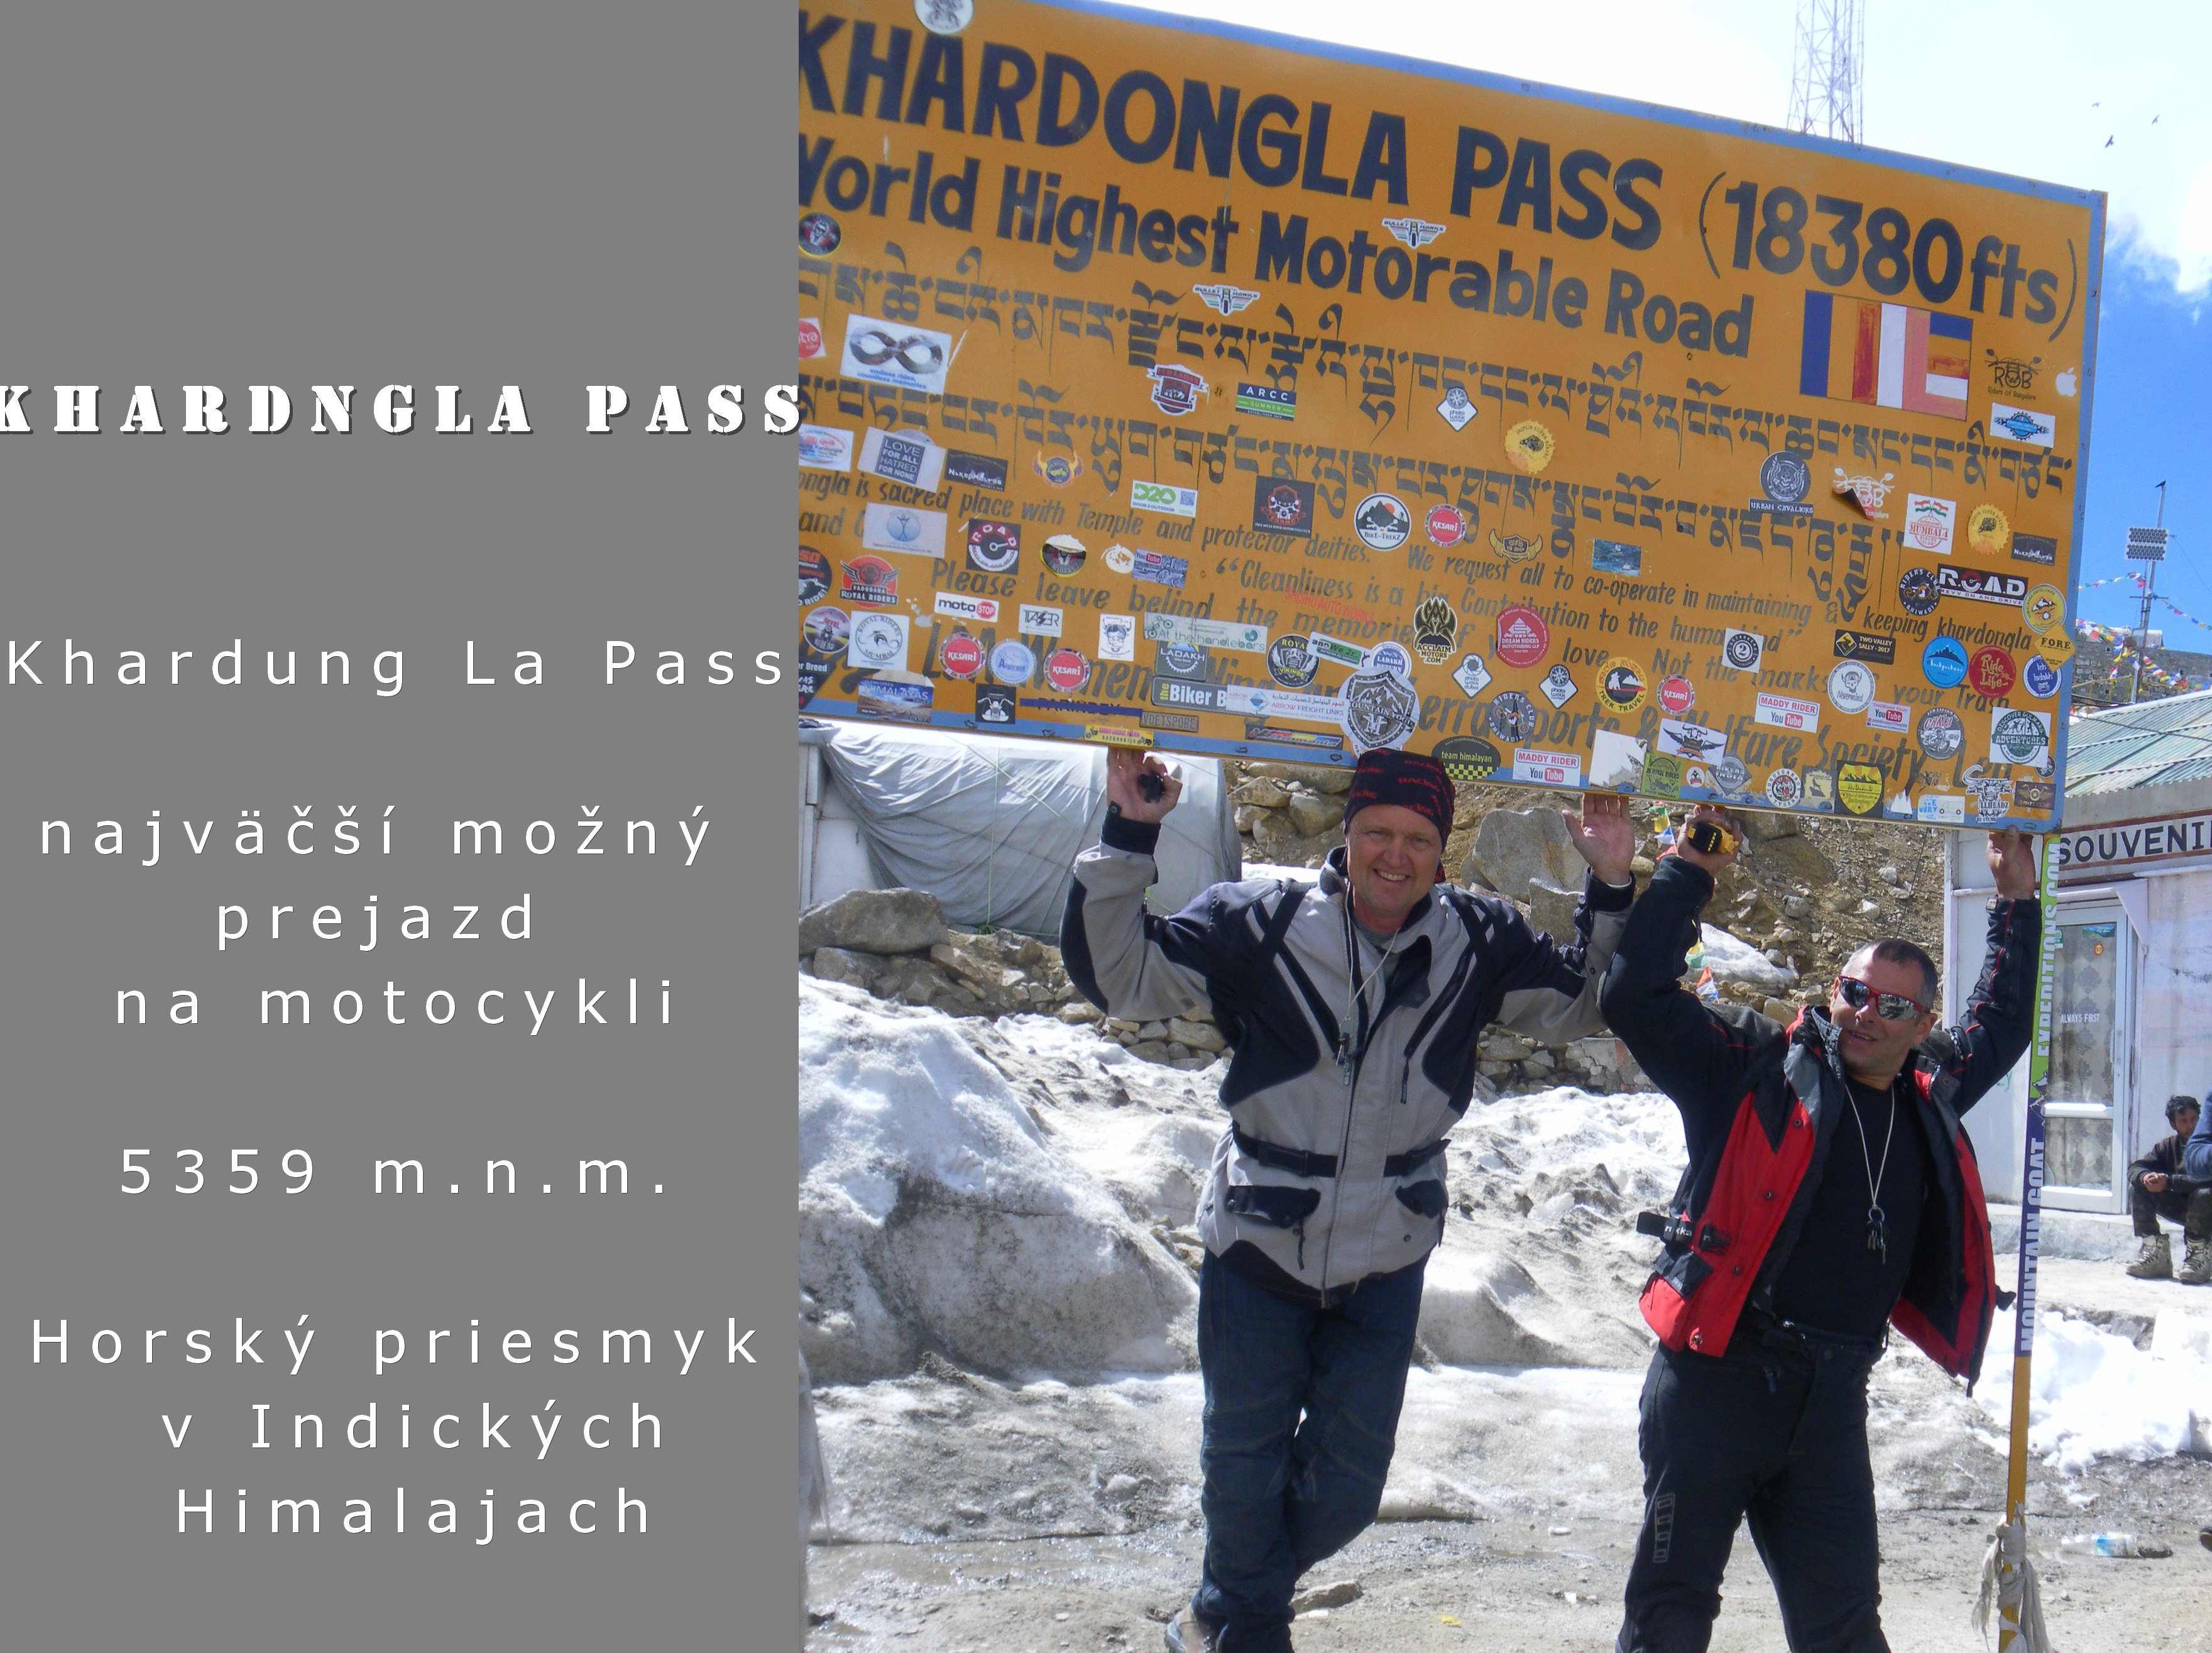 Khardogla Pass